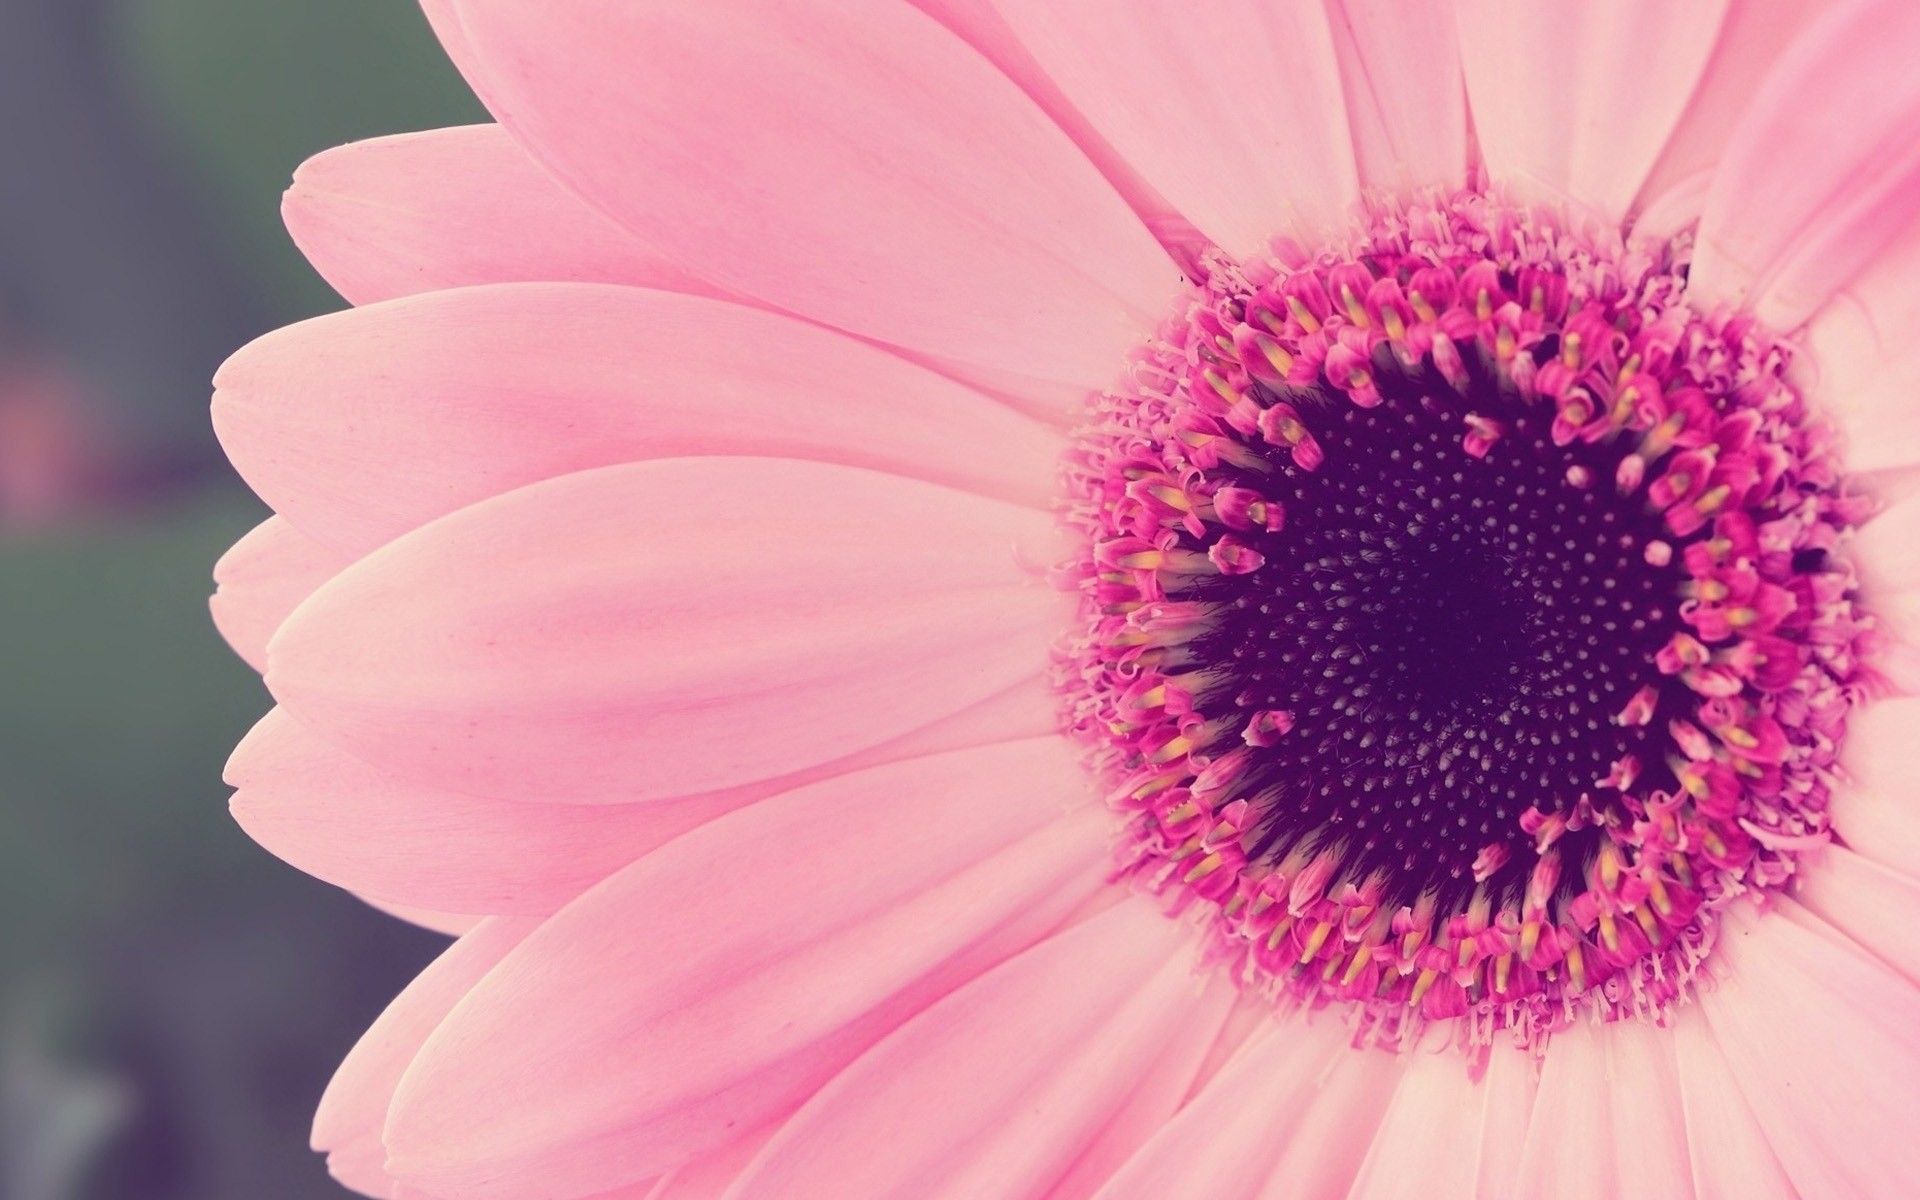 gerbera daisy pink hd wallpaper | °PC Waℓℓpapers° | Pinterest | Hd ...